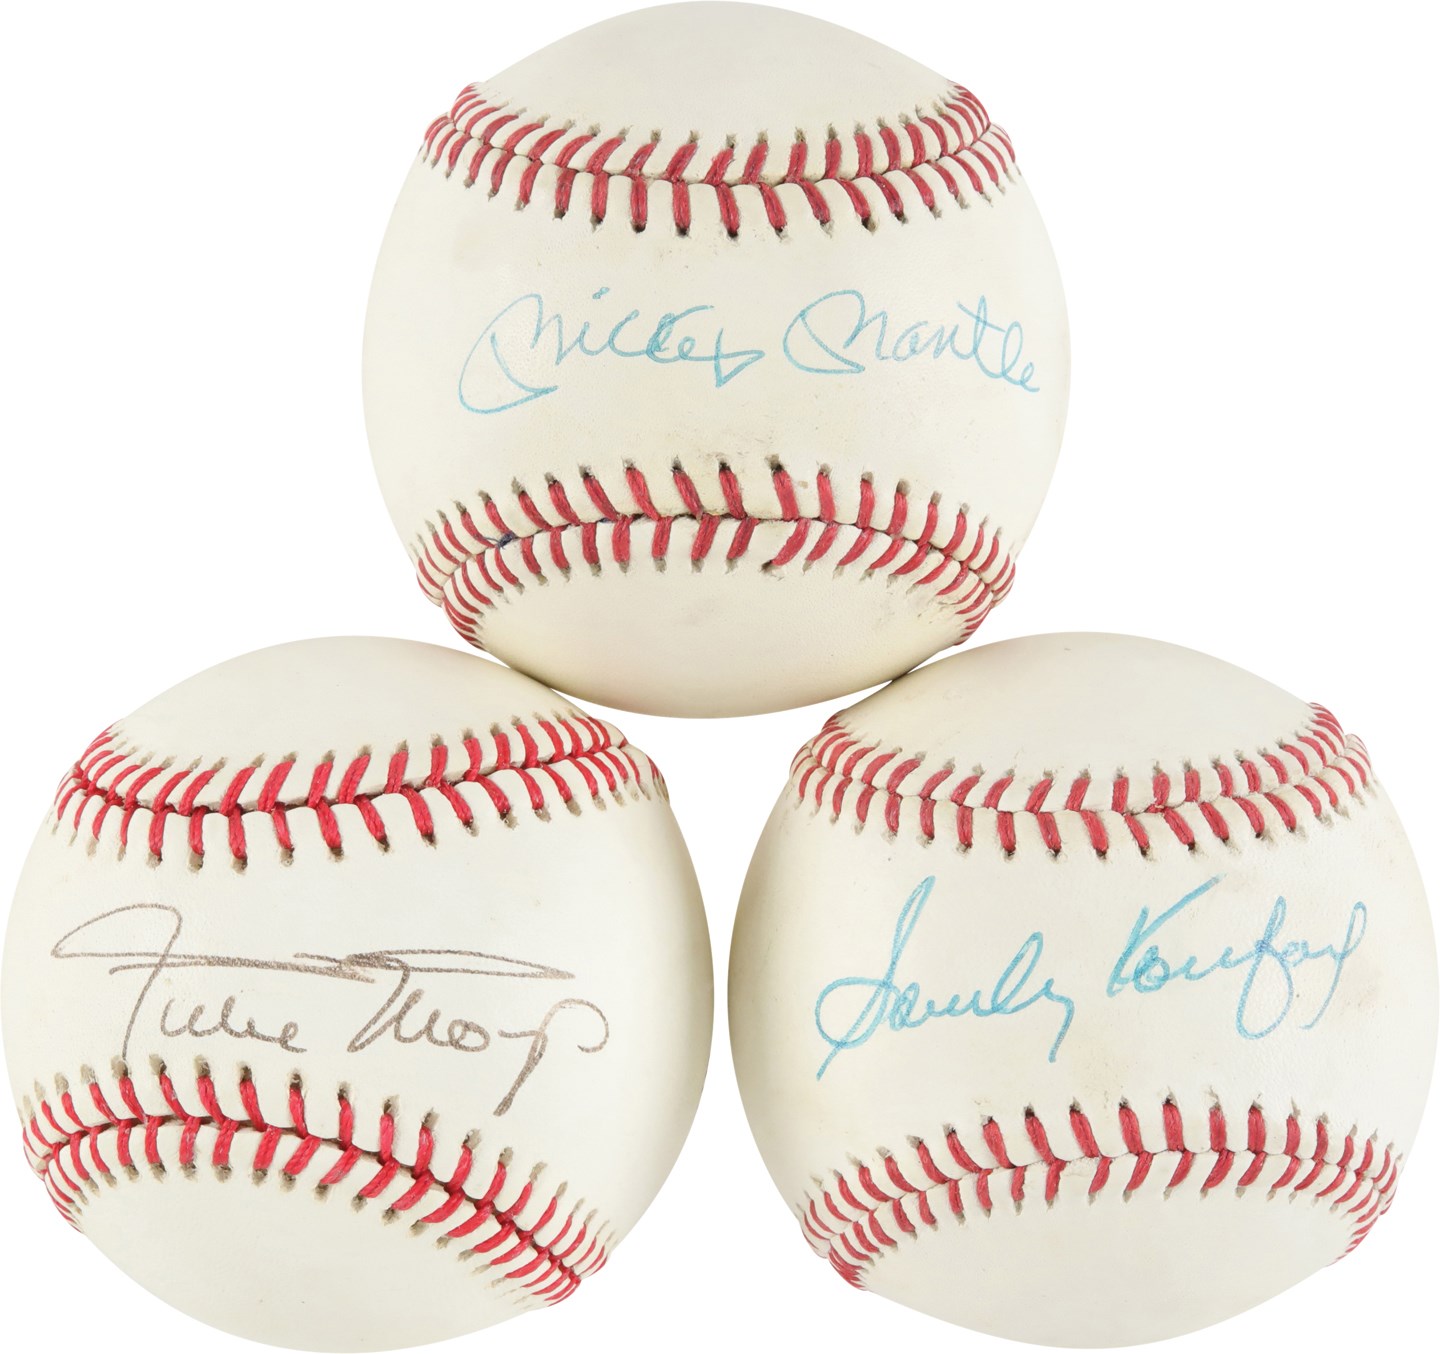 - Single-Signed Baseballs - Mantle, Koufax, and Mays (3)